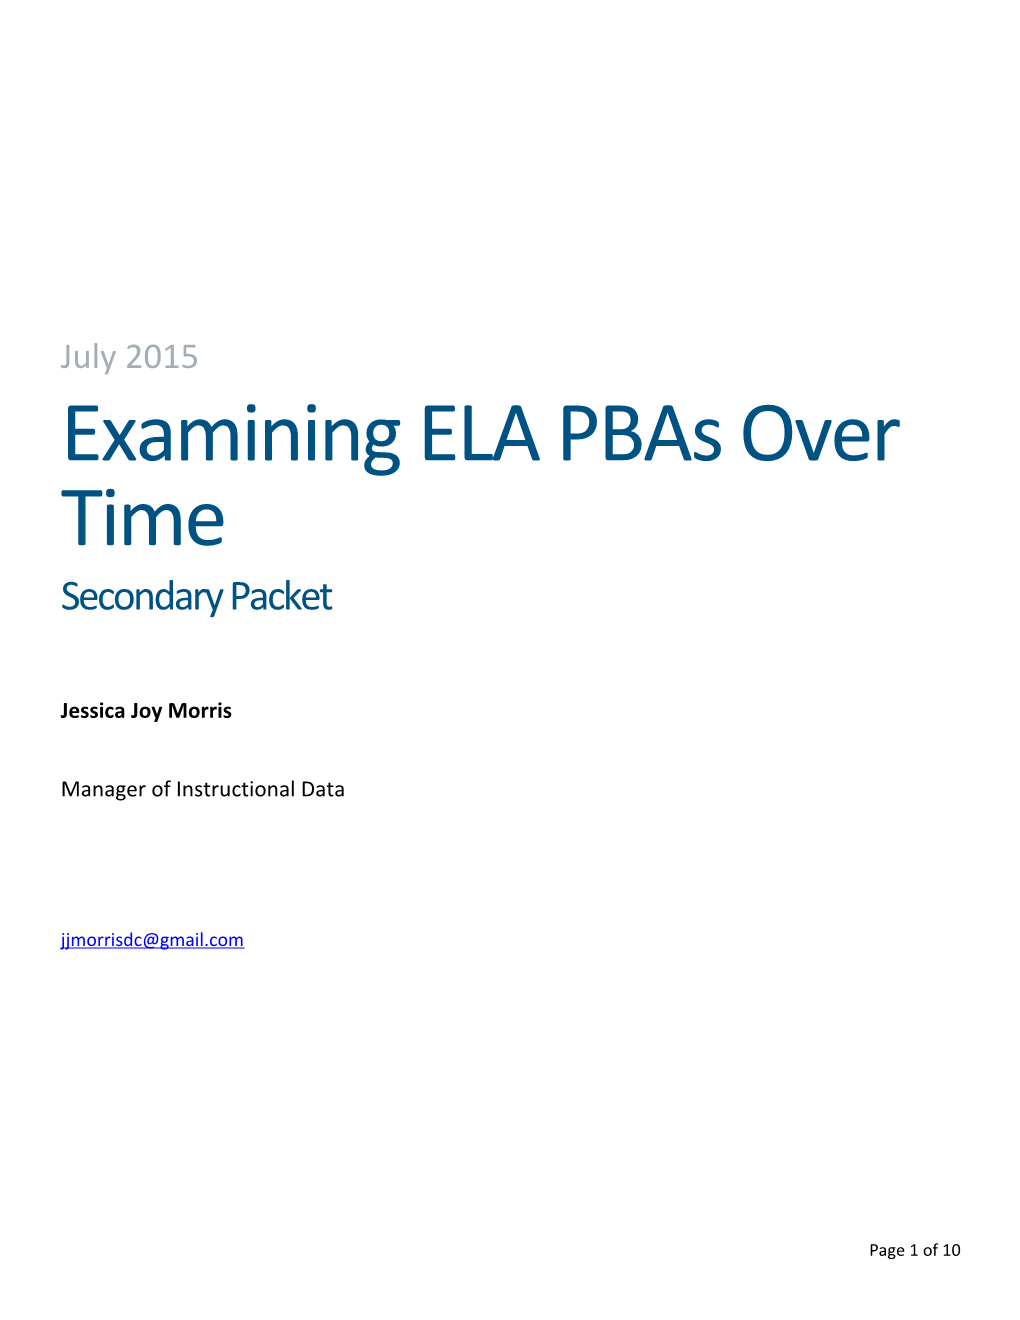 Examining ELA Pbas Over Time